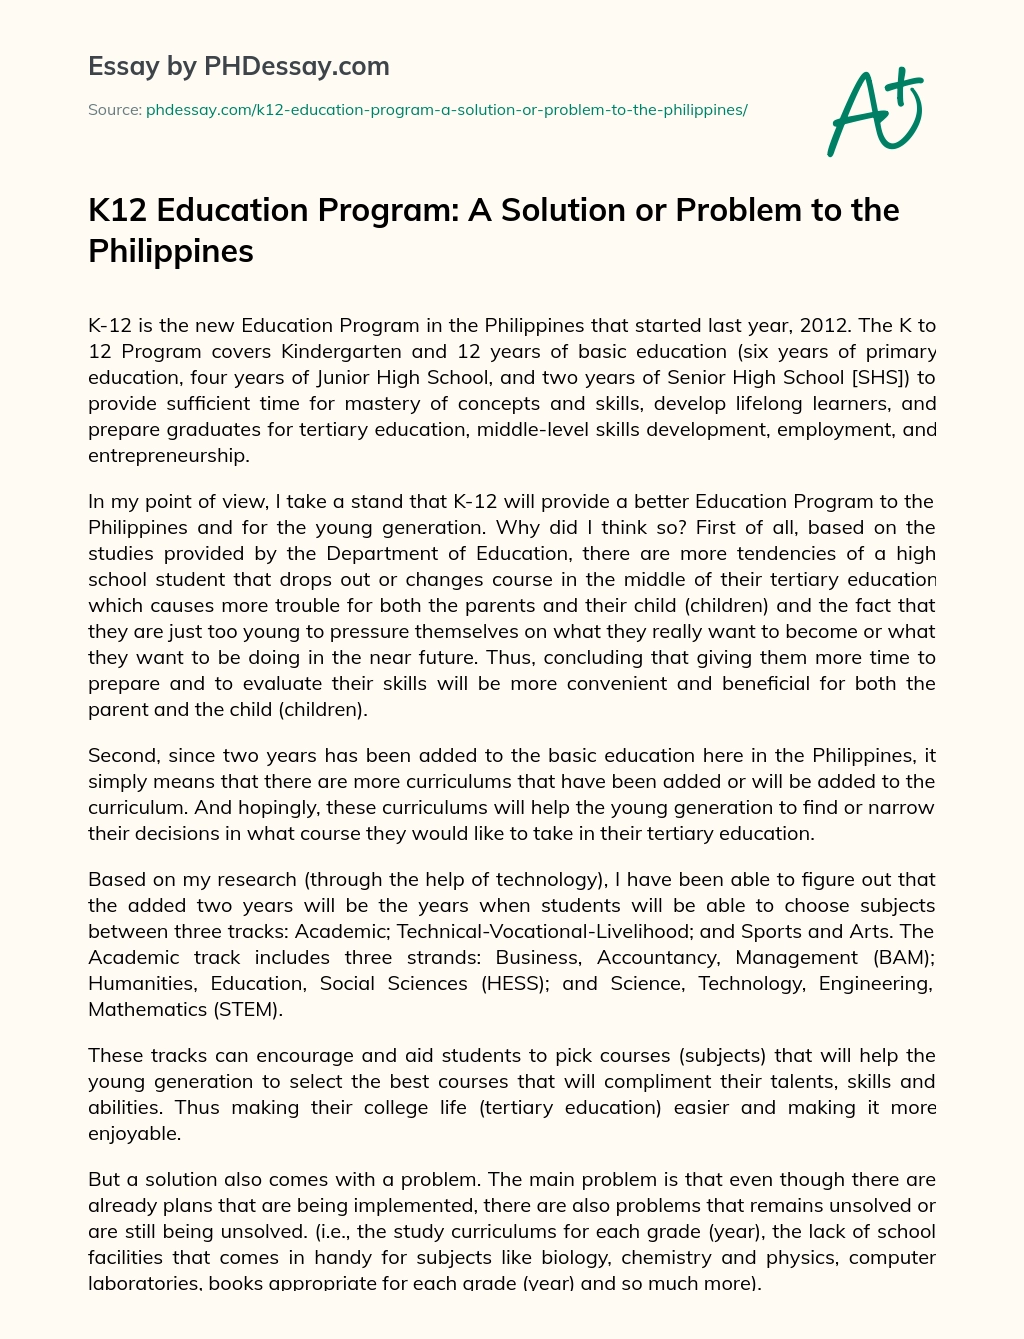 speech about k 12 education